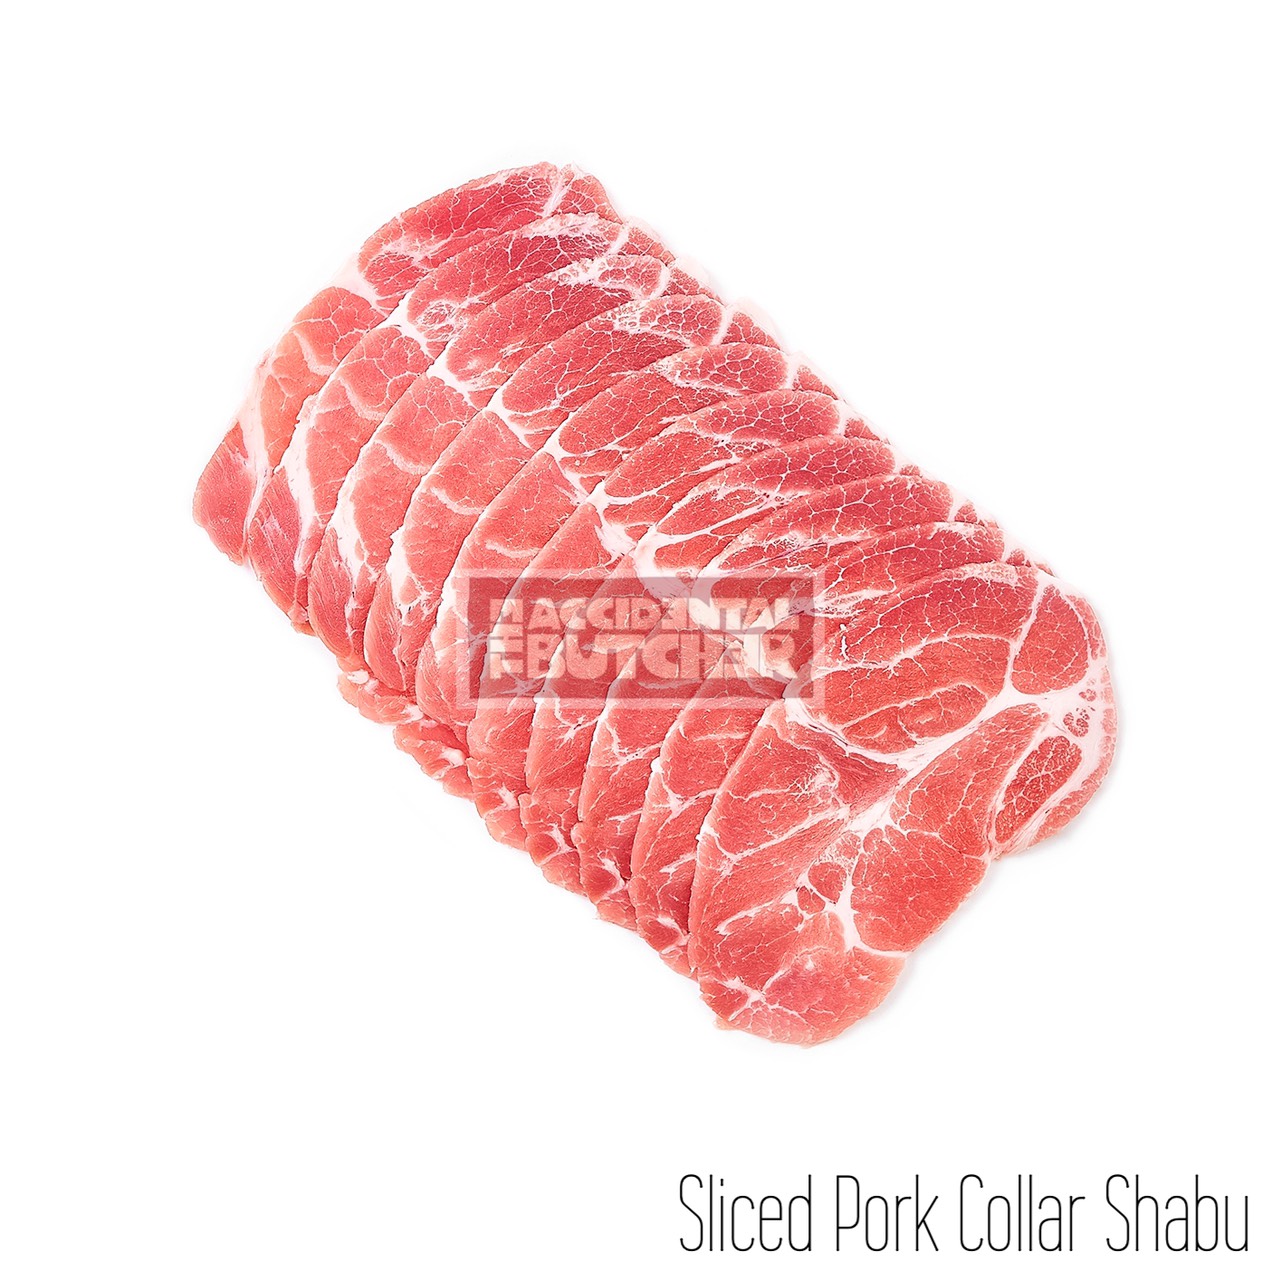 Frozen Sliced Pork Collar (Shabu)